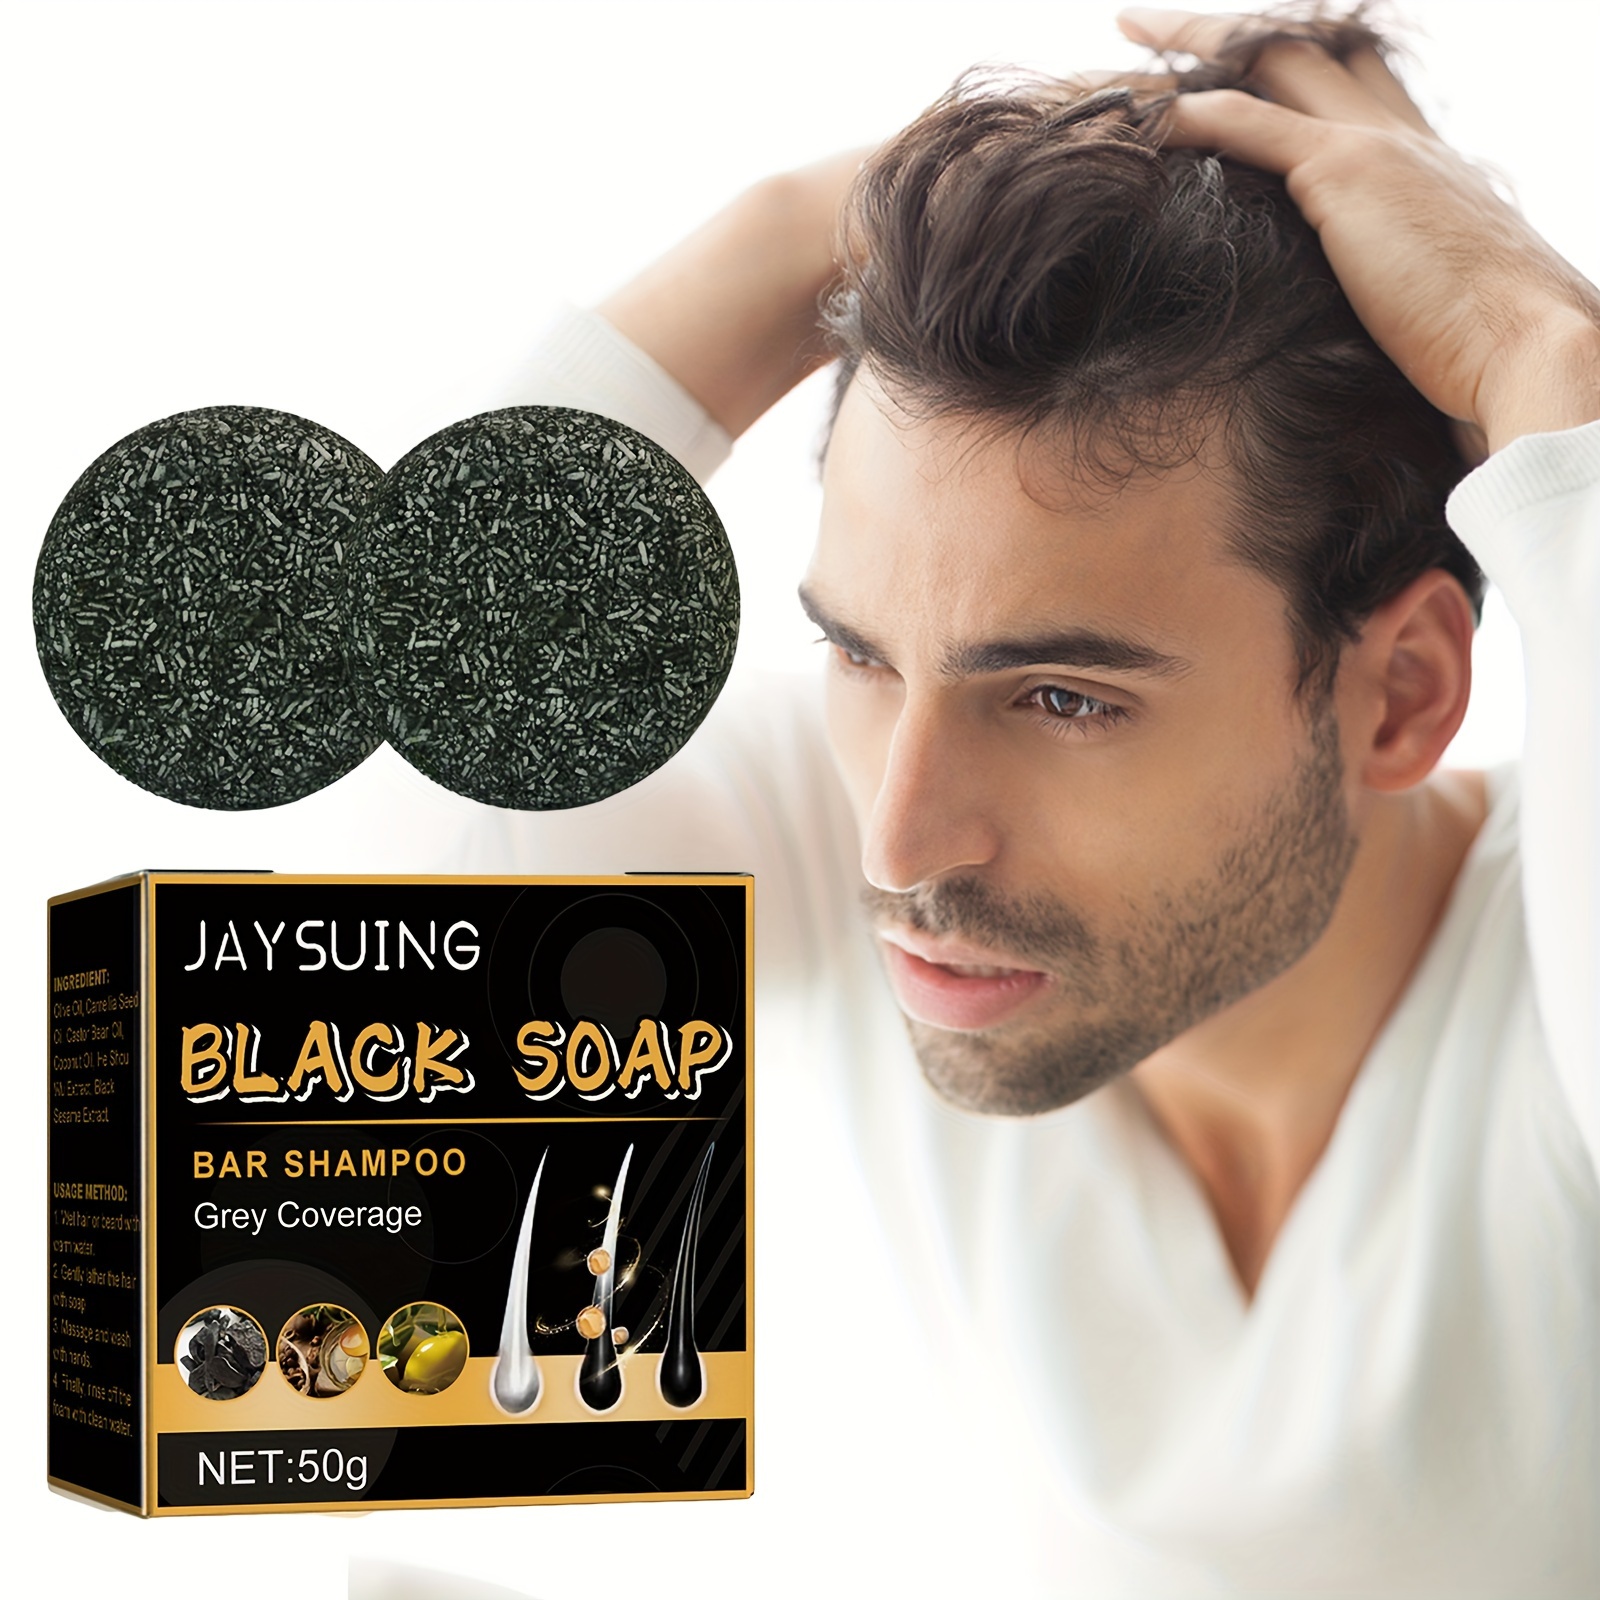 method Men's Bar Soap